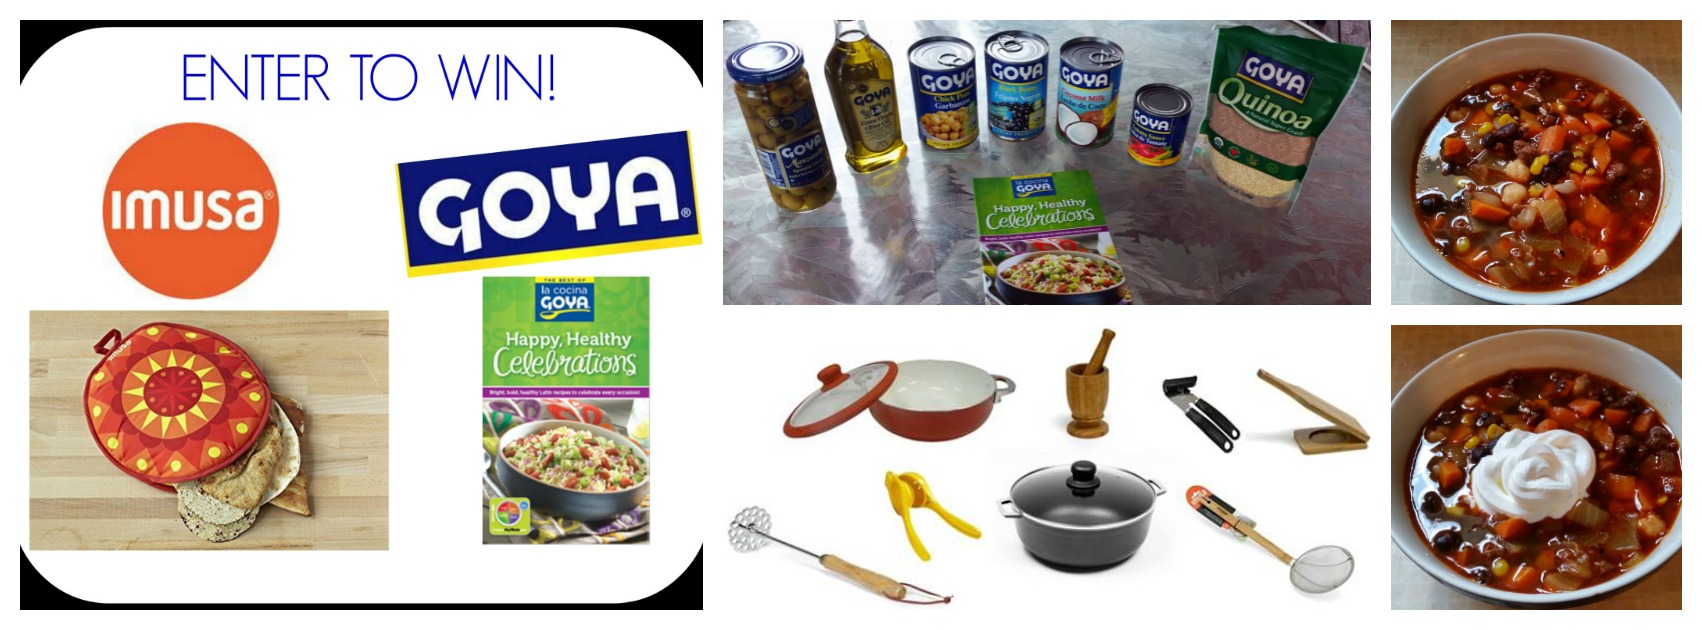 IMUSA’s and Goya’s Hispanic Heritage Month Recipe: Chorizo and Black Bean Soup #IMUSAUSA #Goya  #Giveaway 15